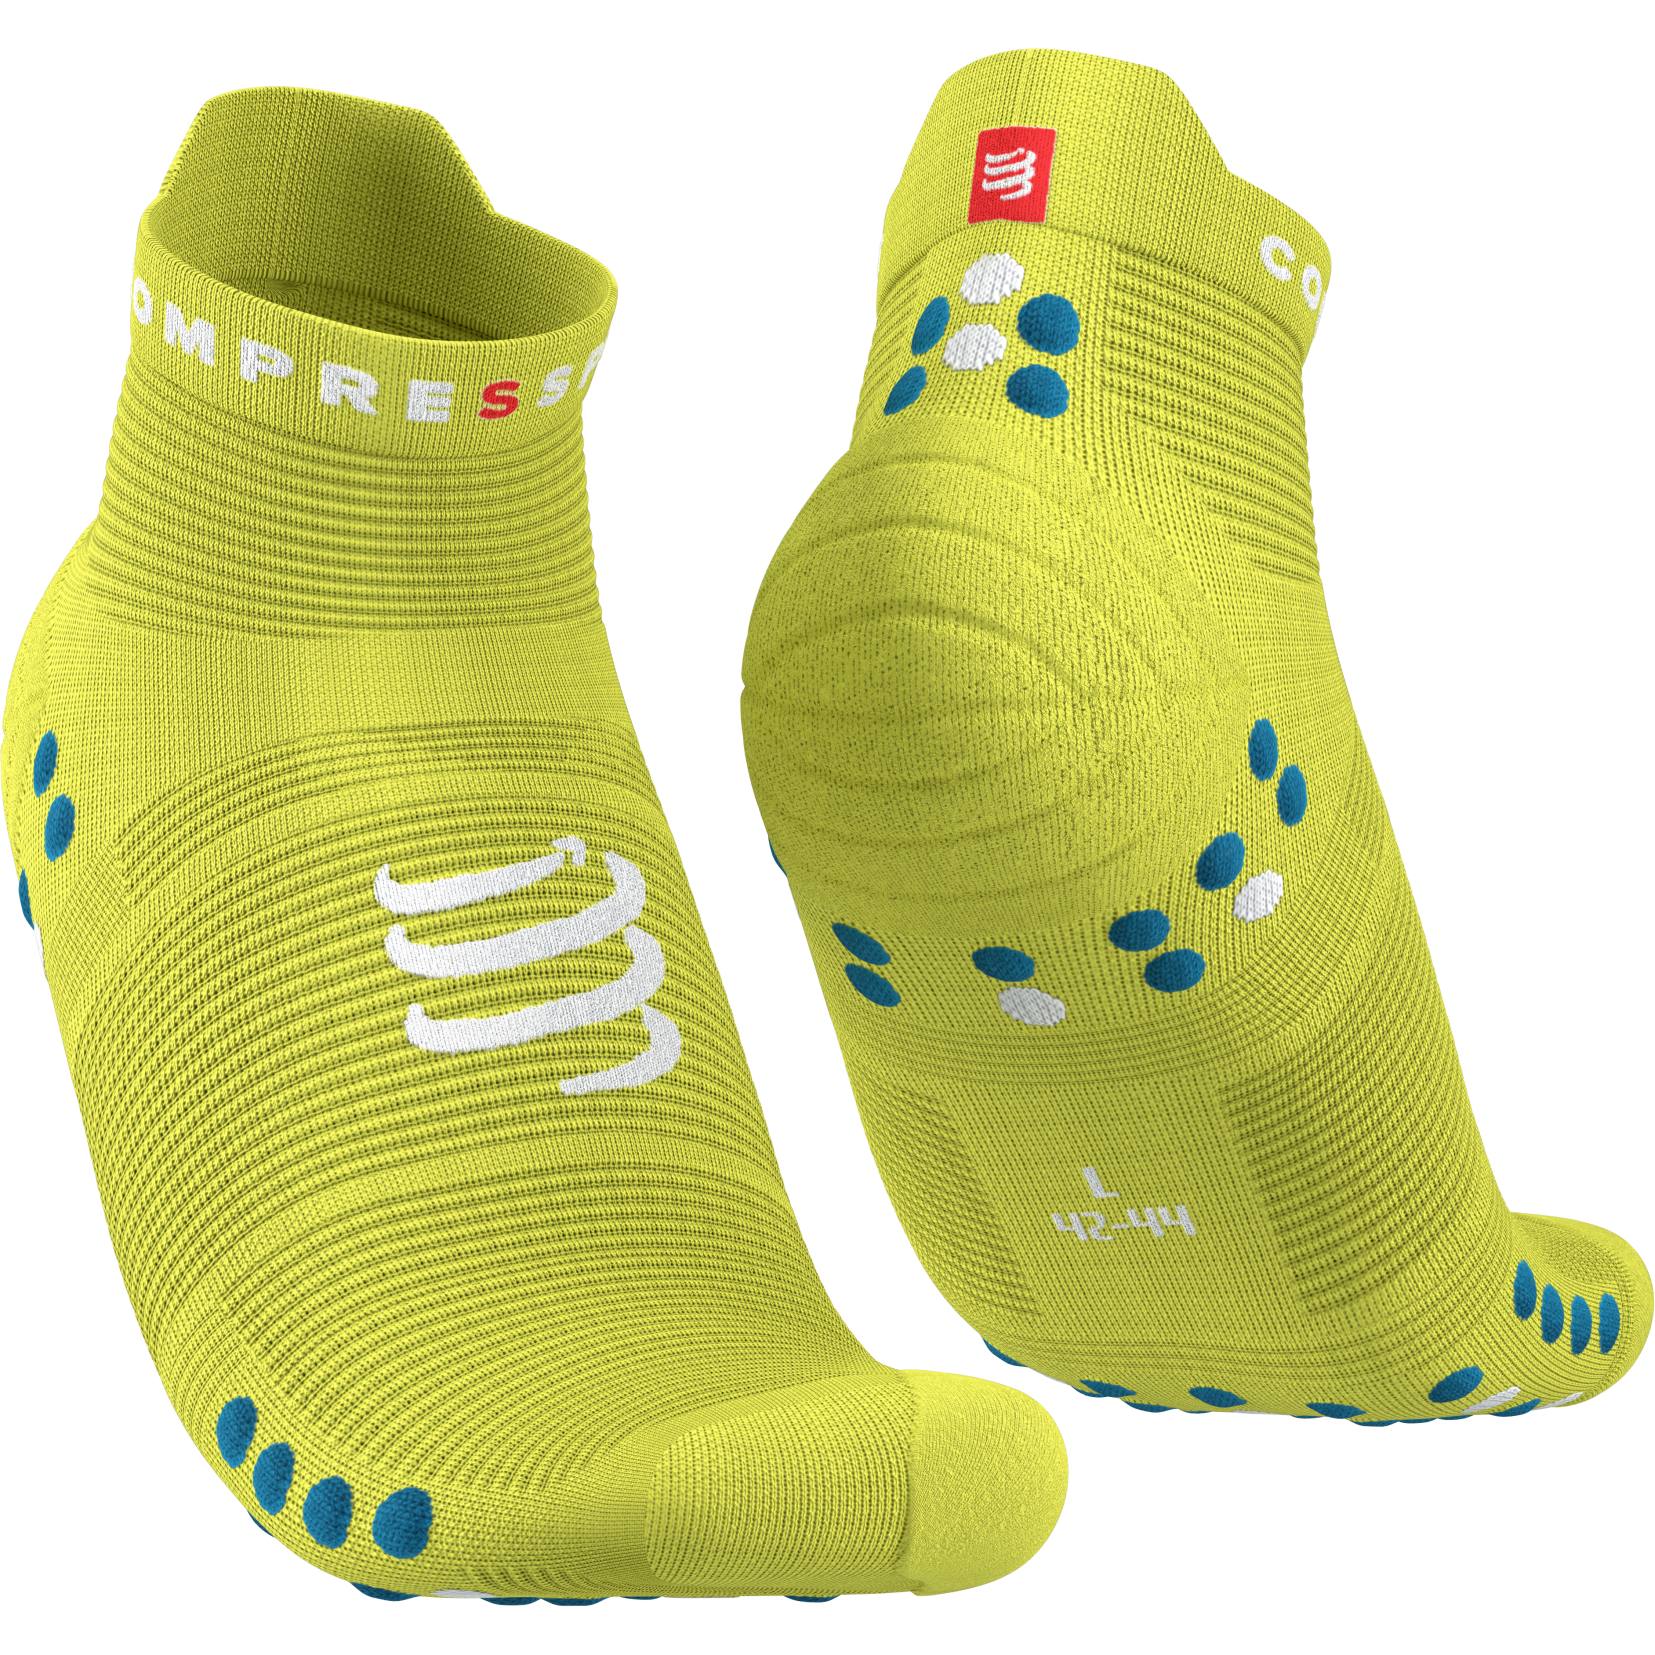 Picture of Compressport Pro Racing Compression Socks v4.0 Run Low - primerose/fjord blue